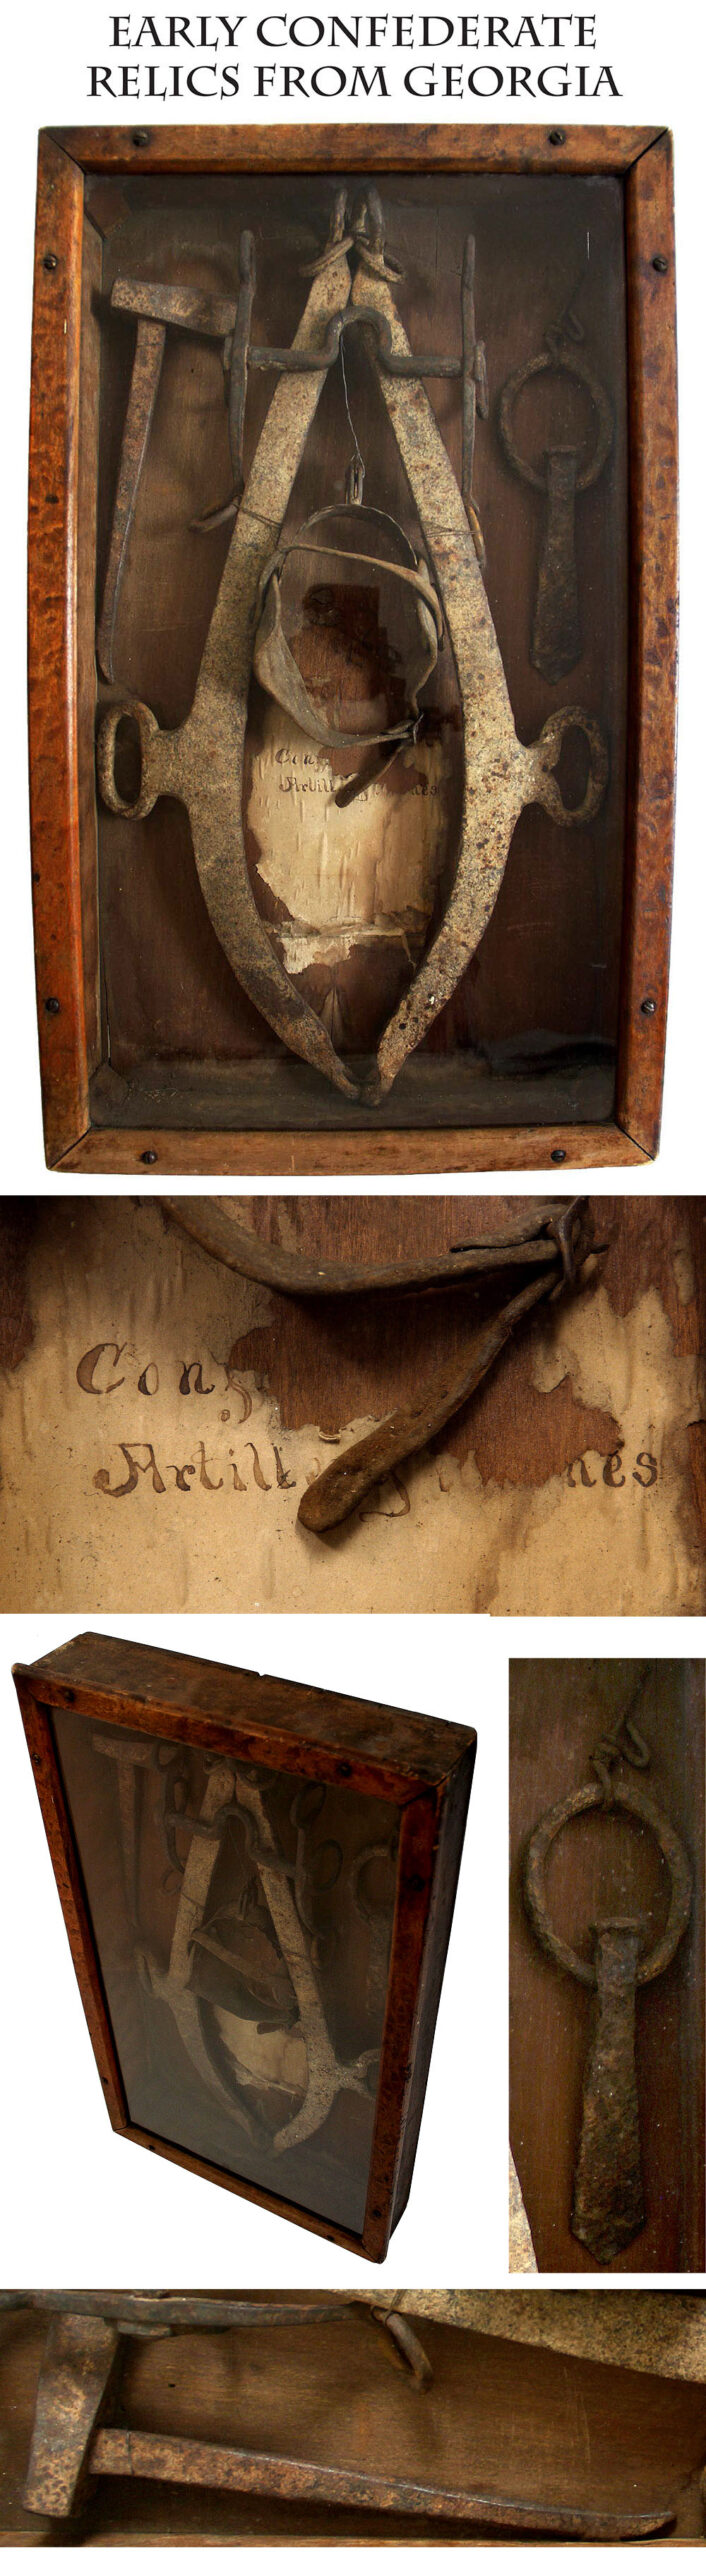 vintage civil war relics souvenir display shadow box